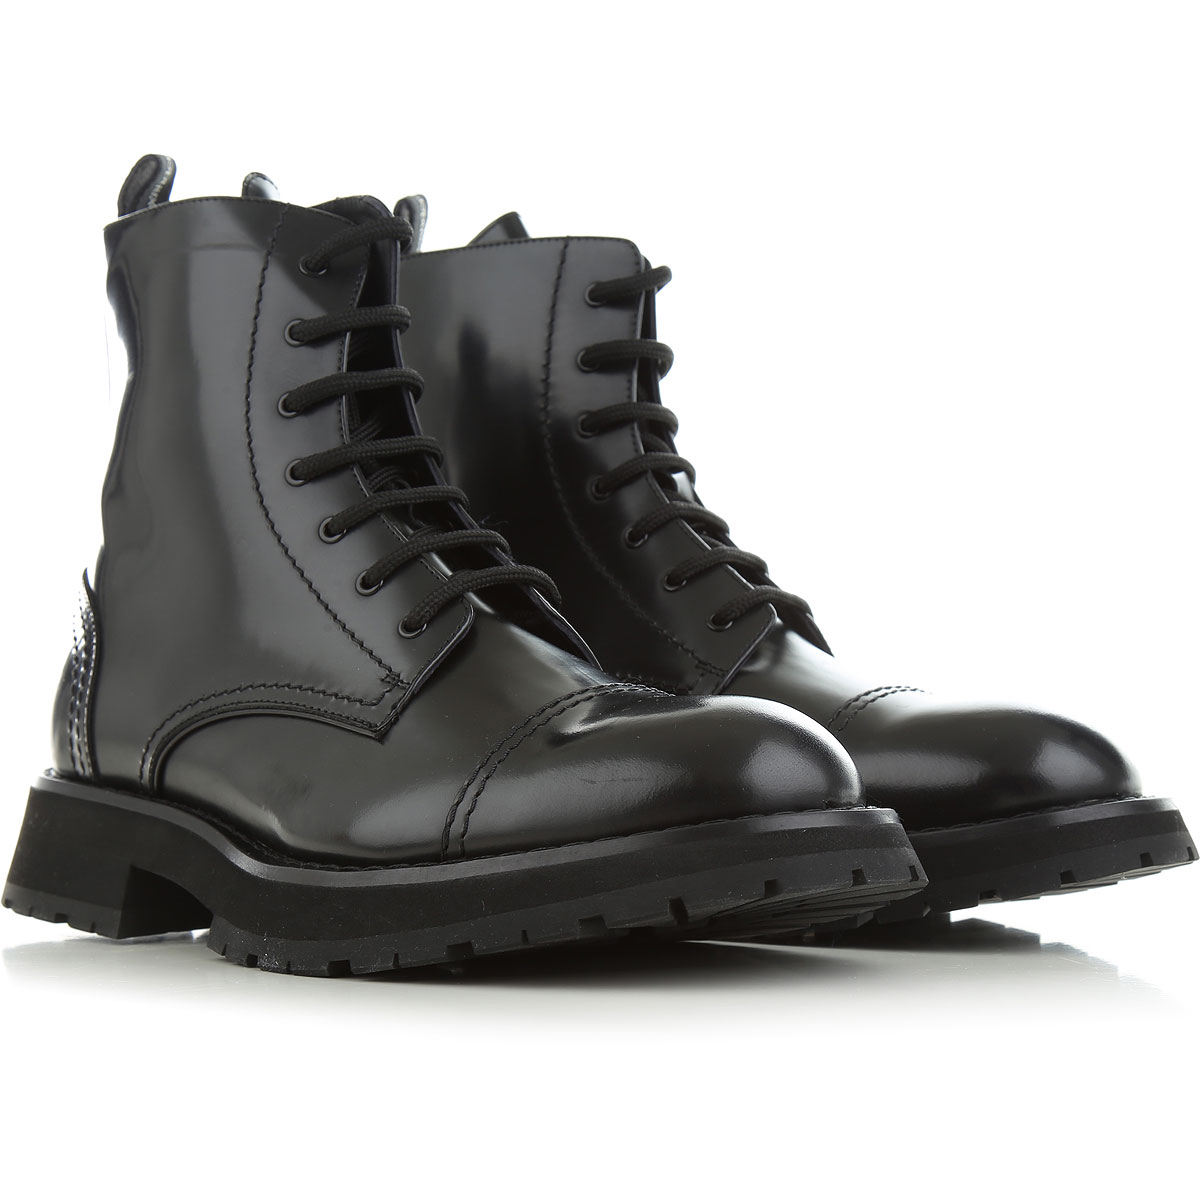 Mens Shoes Alexander McQueen, Style code: 708172-wlc61-1000